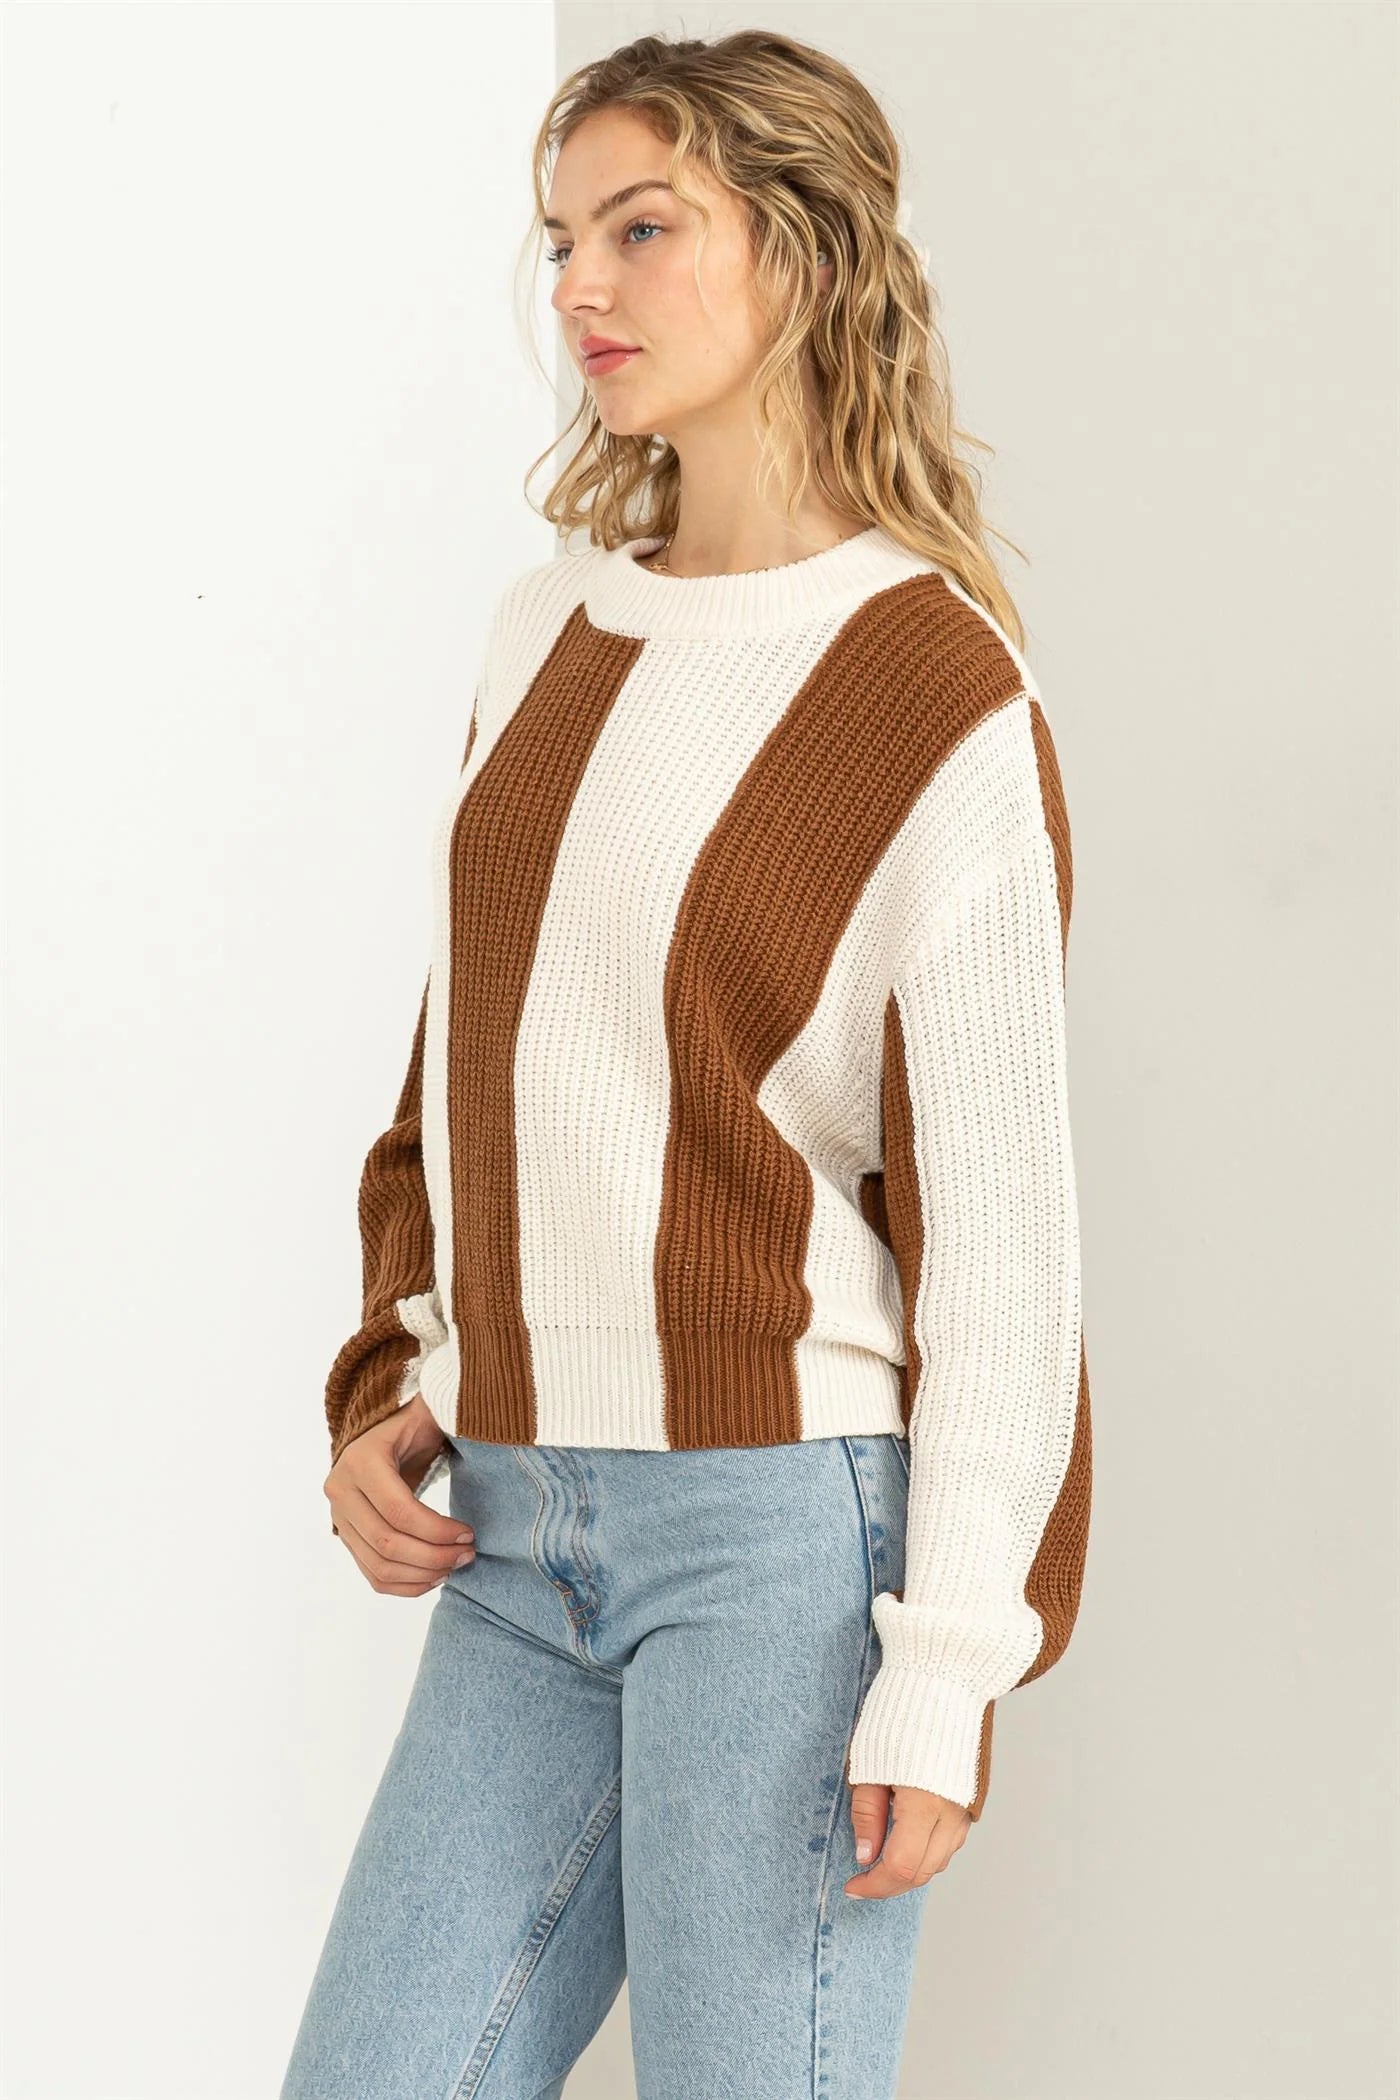 HYFVE Cream/Brown Vertical Striped Sweater